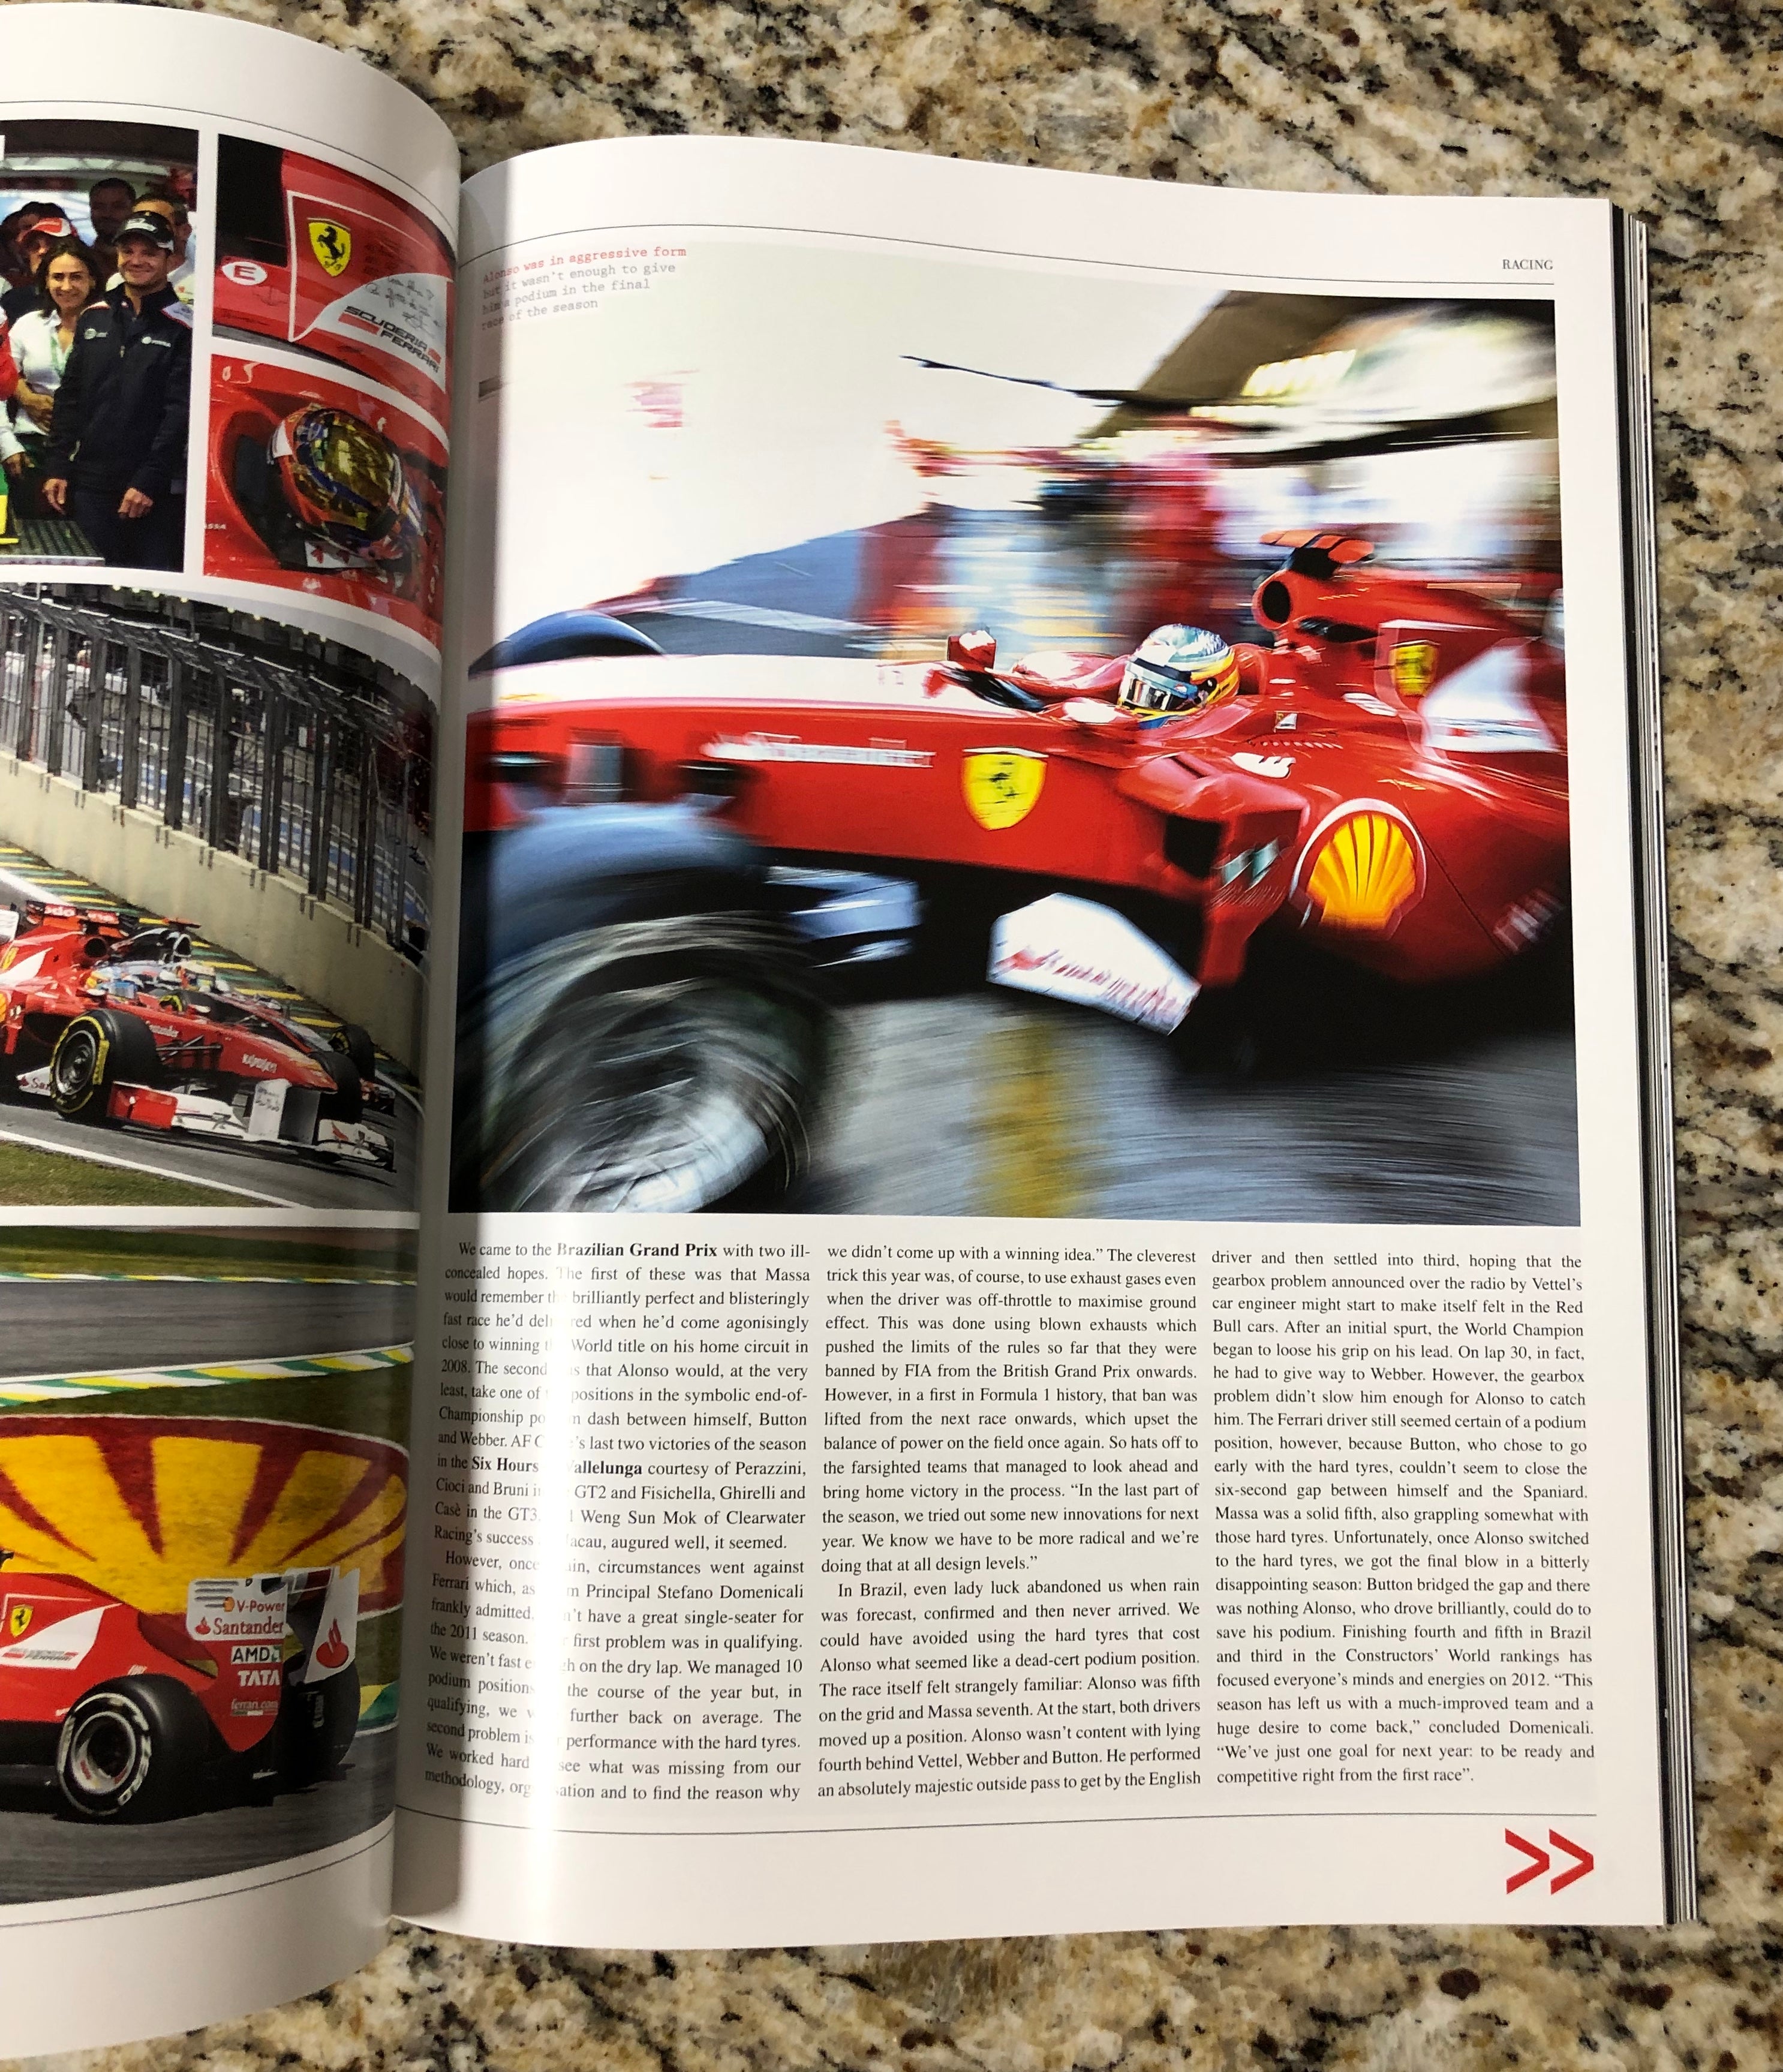 2011 Ferrari Yearbook